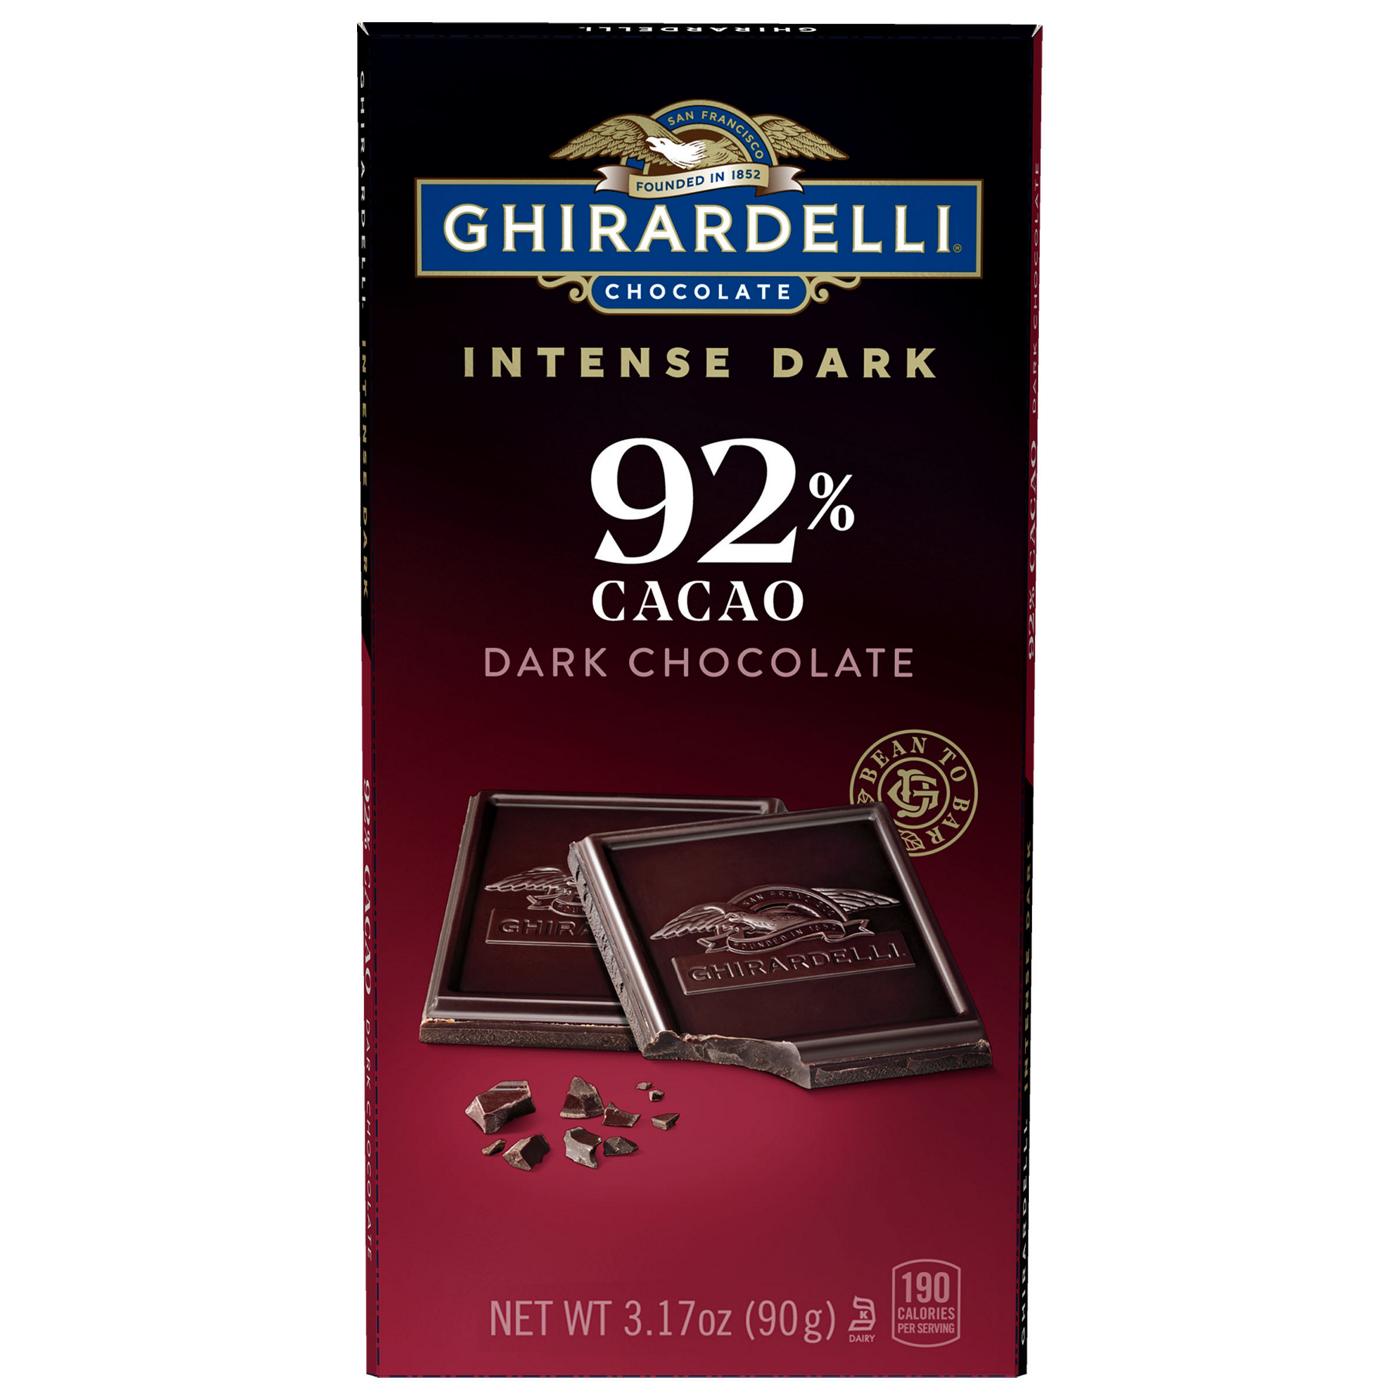 Ghirardelli Intense Dark 92% Cacao Chocolate Bar; image 1 of 3